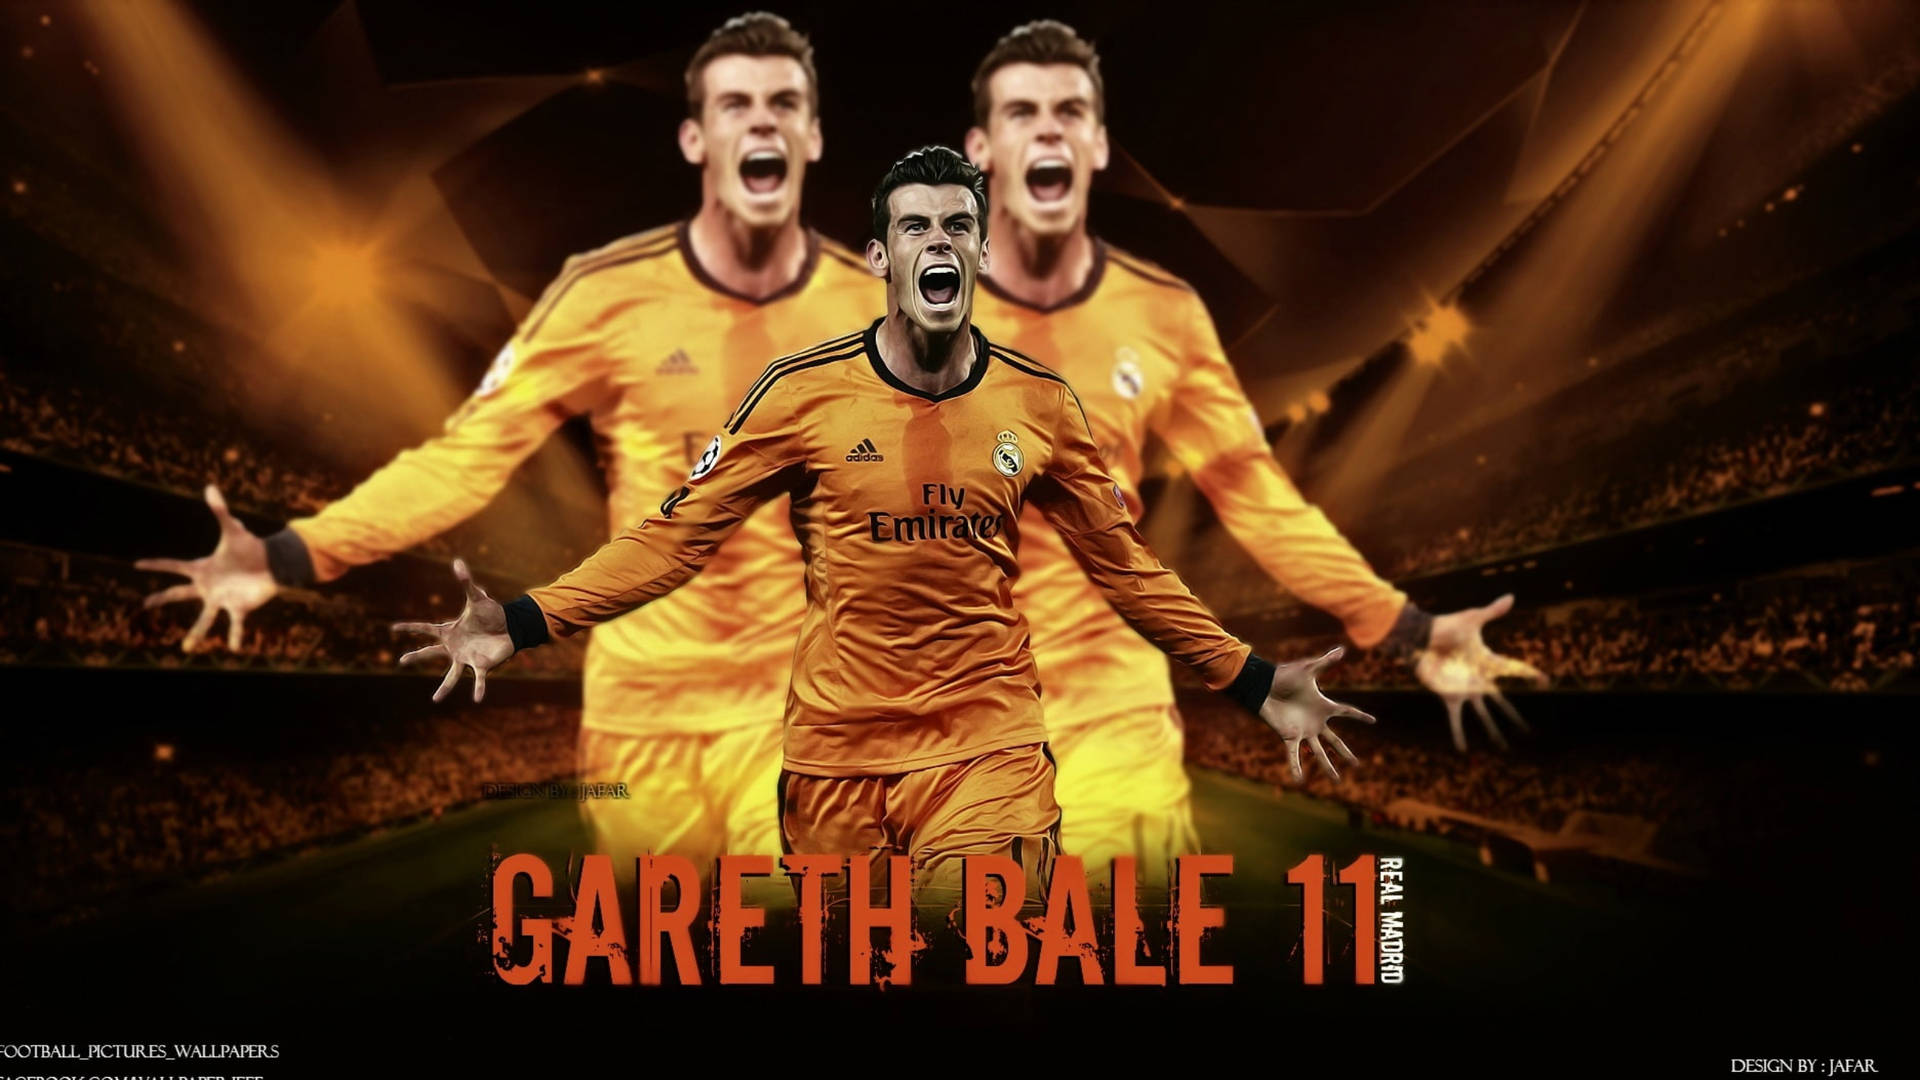 Gareth Bale 11 Digital Poster